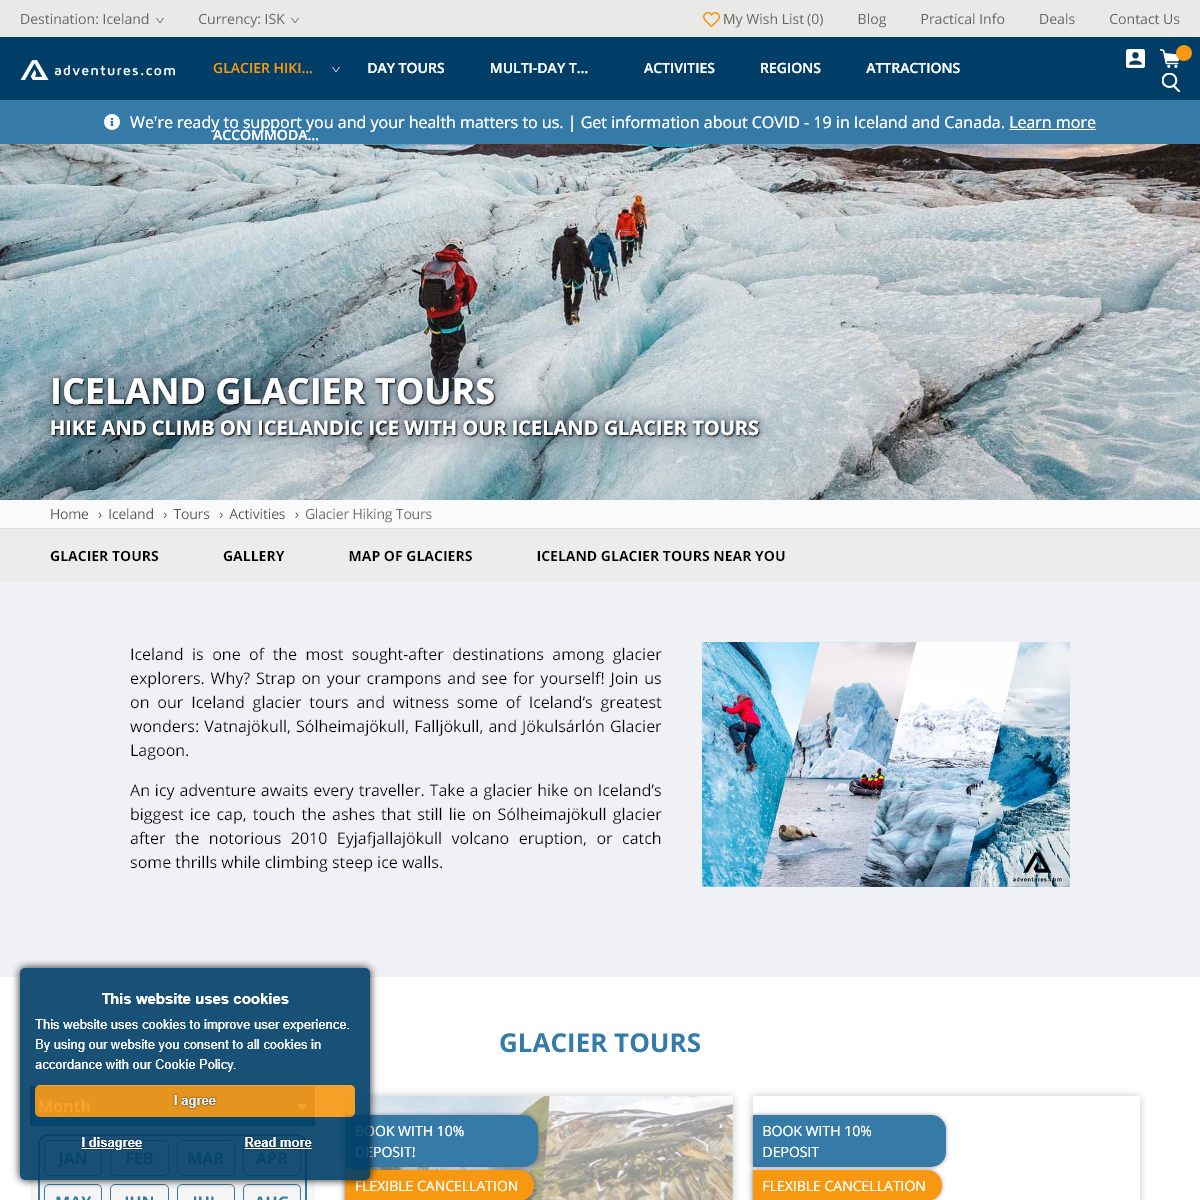 Glacier Hiking Tours in Iceland - Adventures.com